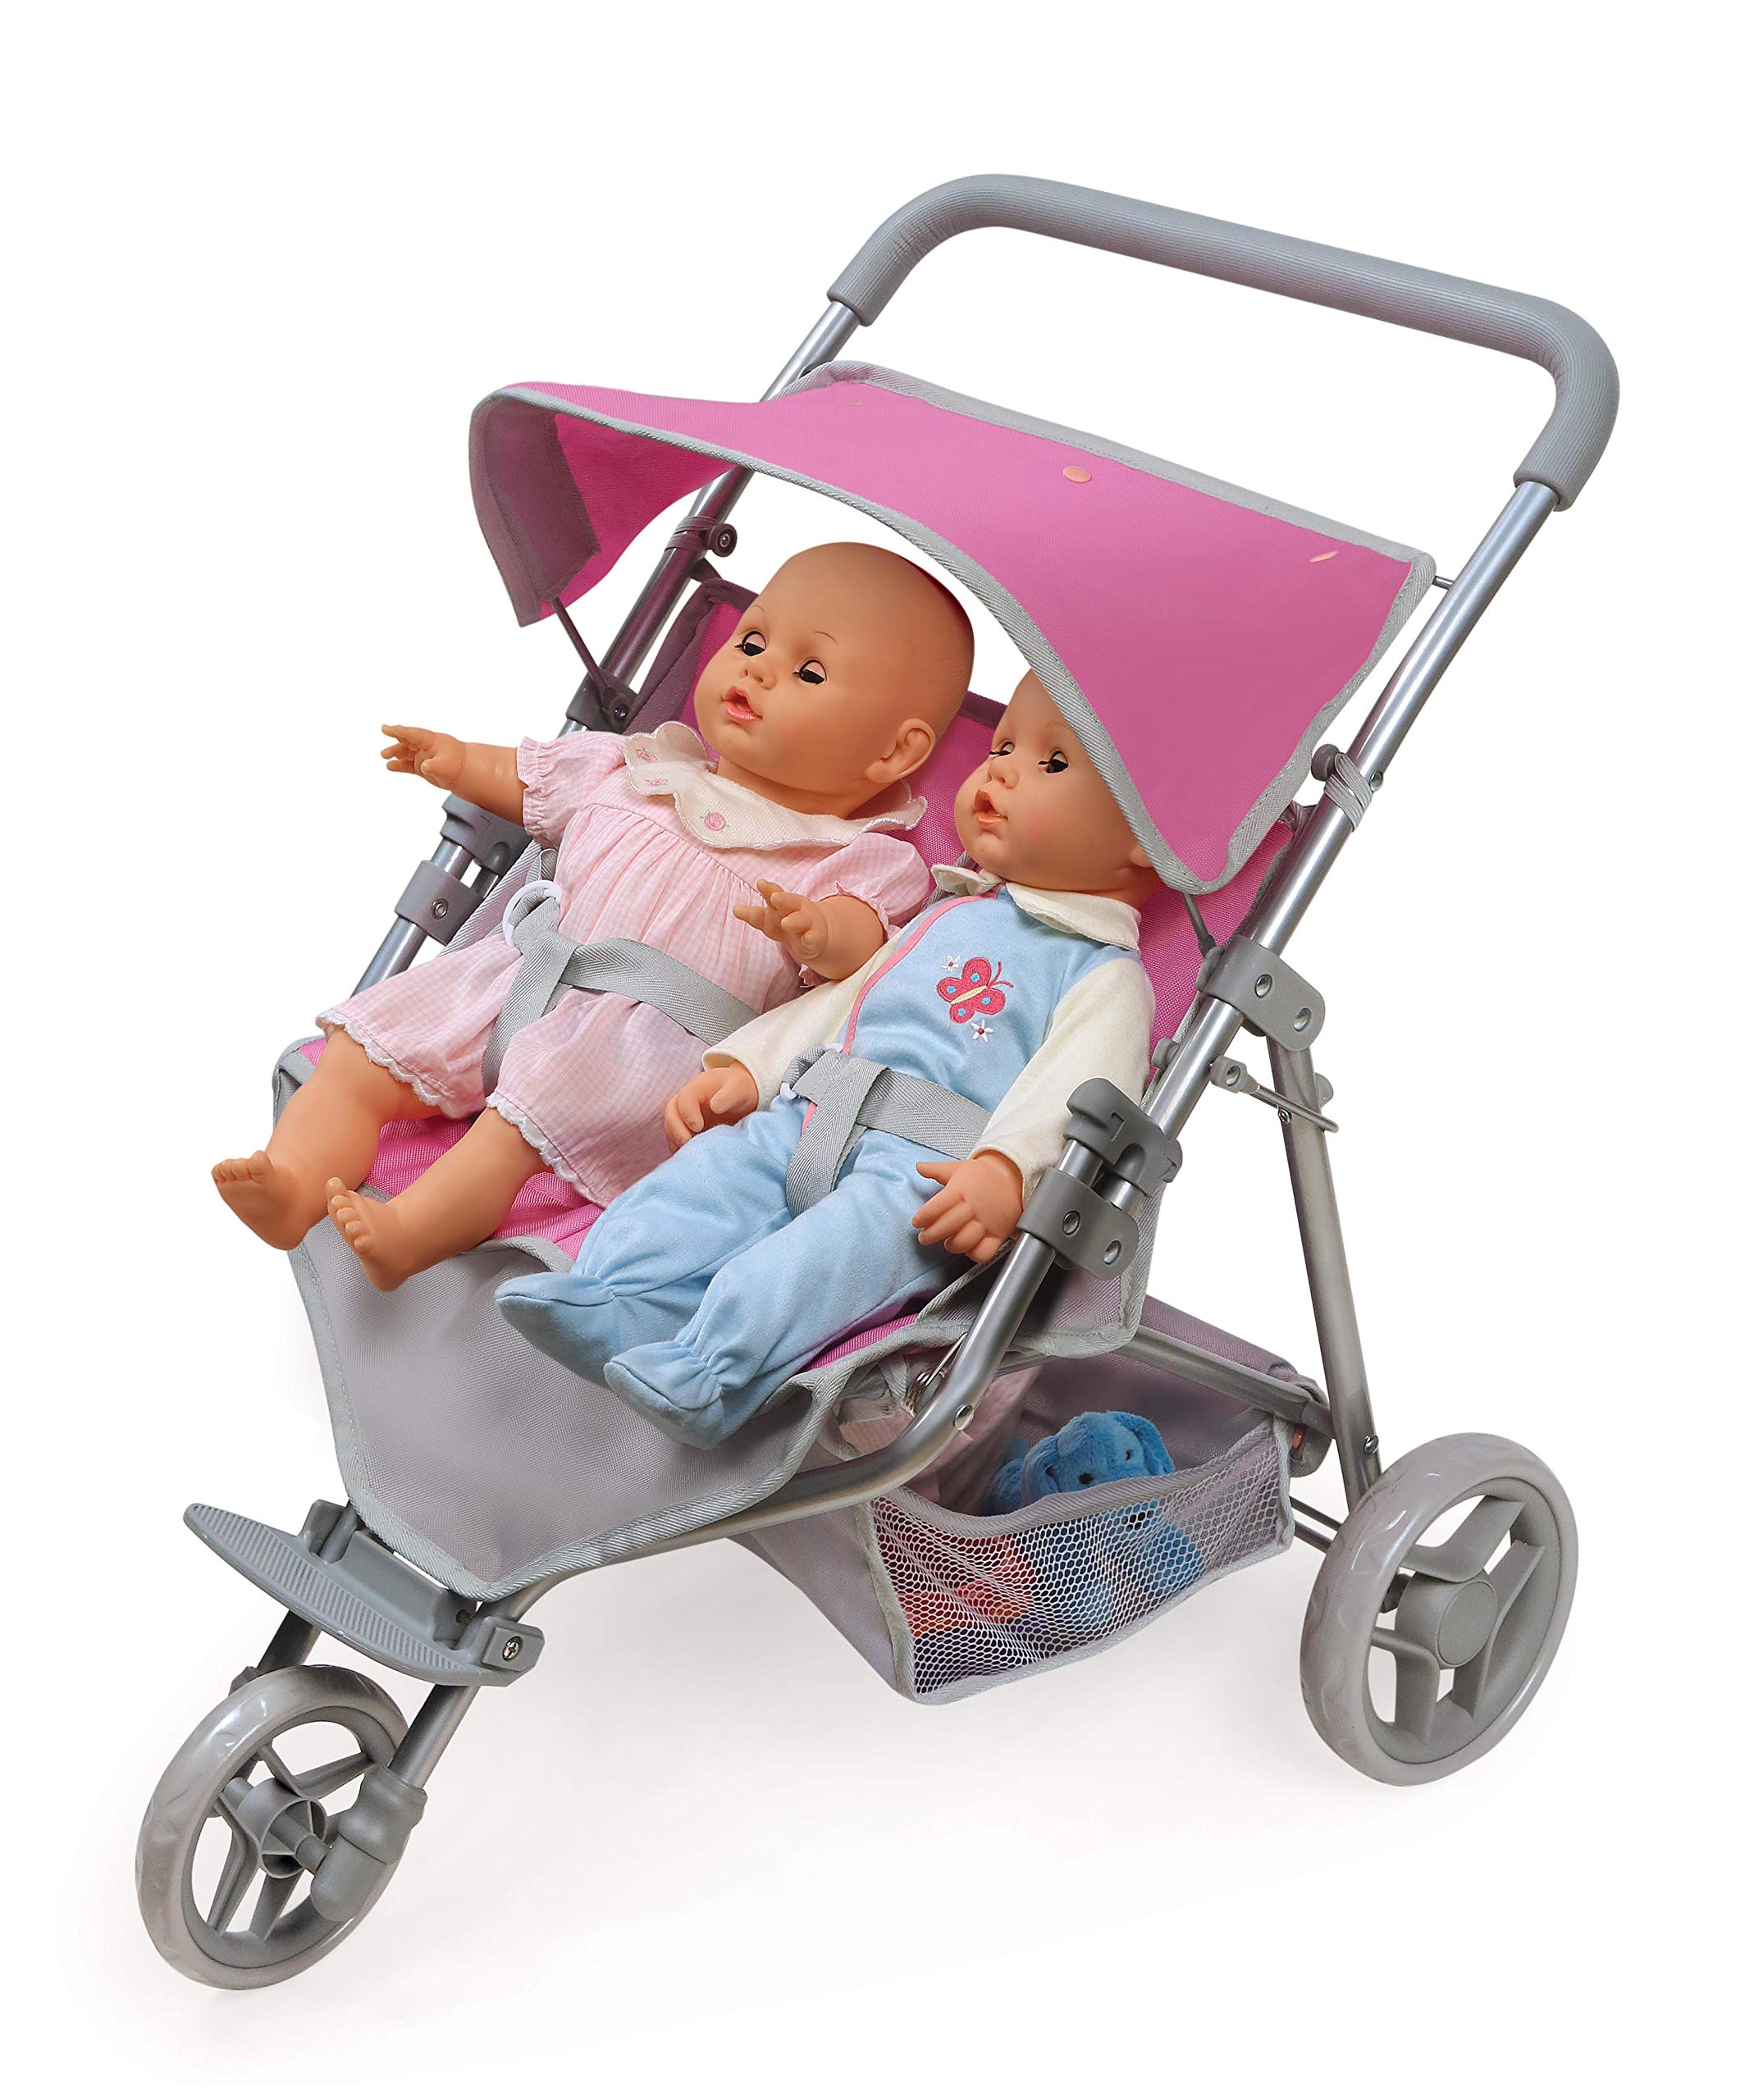 Badger Basket Trek Toy 3-Wheel Folding Twin Jogging Doll Stroller for 16 inch Dolls - Pink/Gray